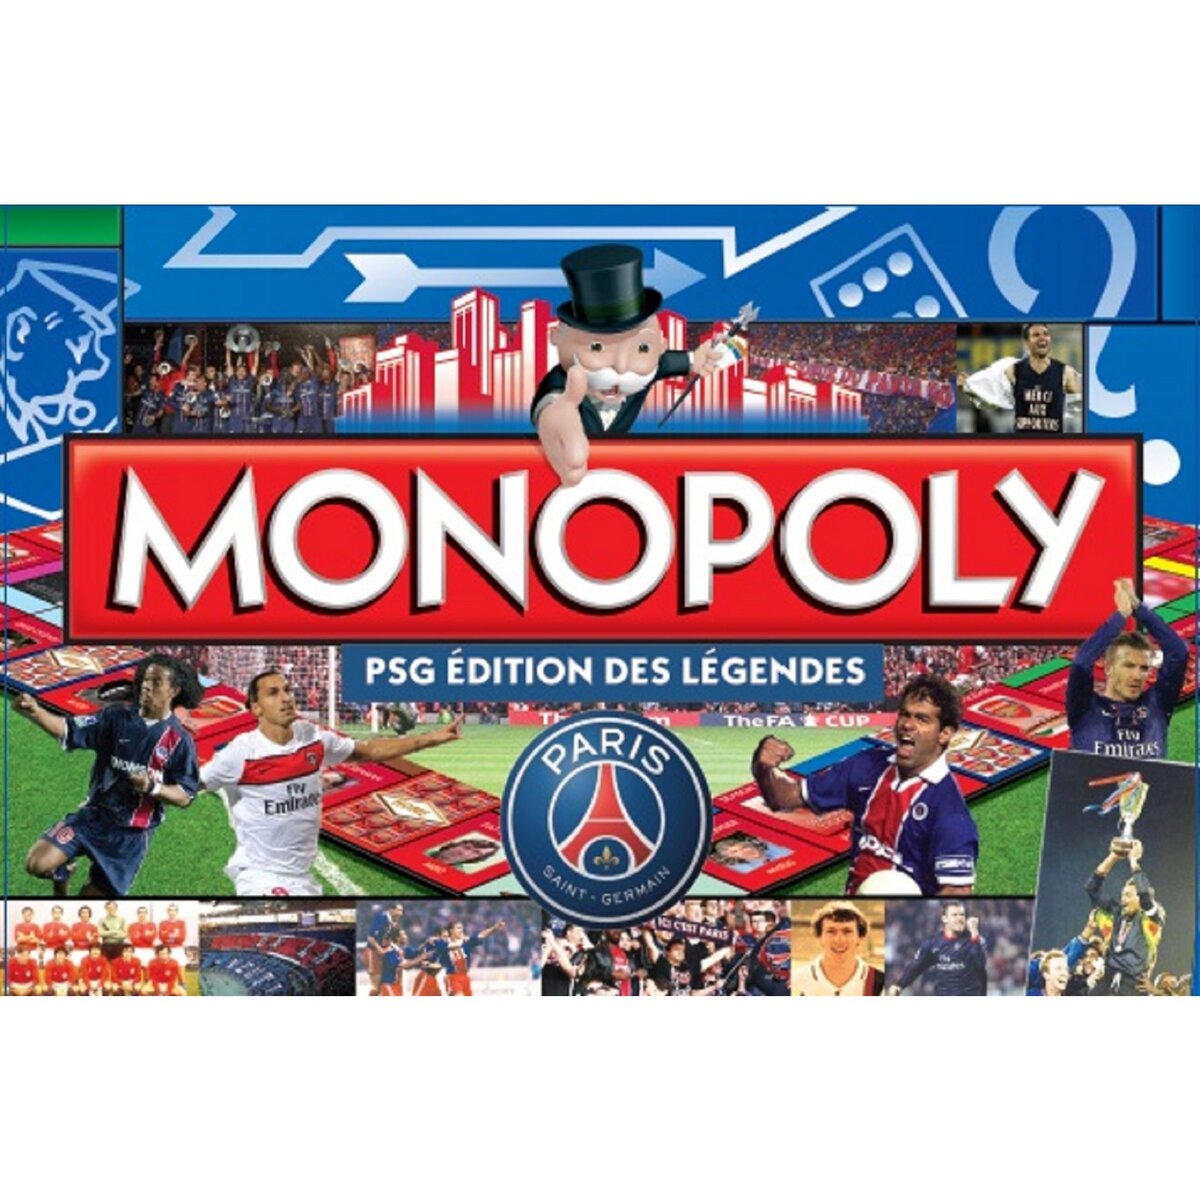 WINNING MOVES Monopoly football PSG 2014 pas cher 